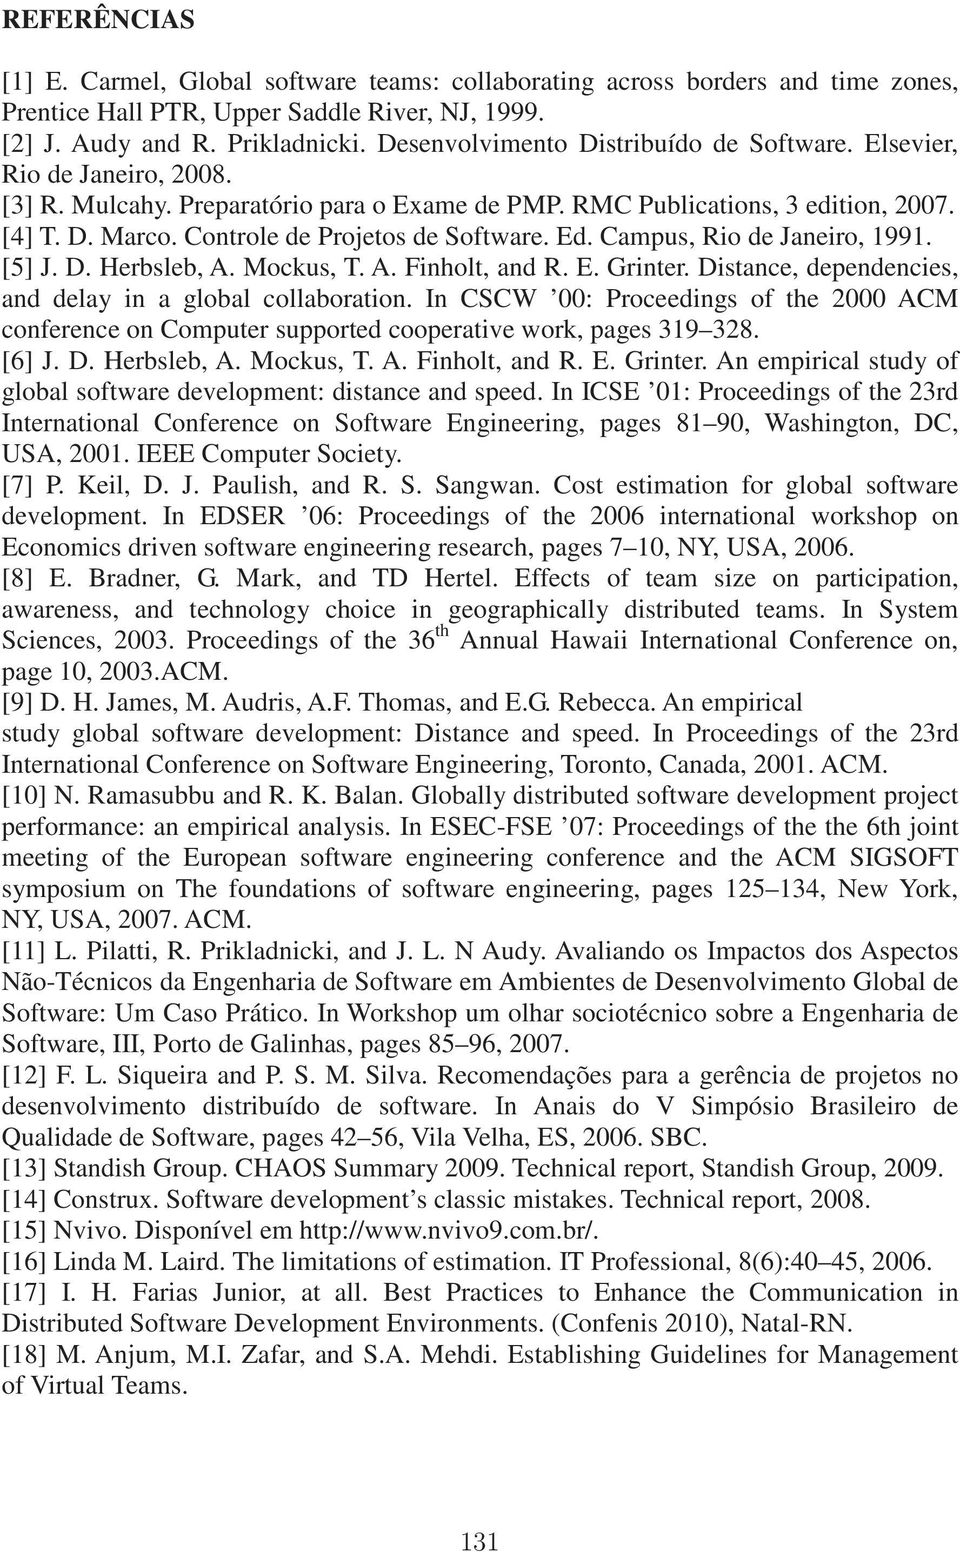 Controle de Projetos de Software. Ed. Campus, Rio de Janeiro, 1991. [5] J. D. Herbsleb, A. Mockus, T. A. Finholt, and R. E. Grinter. Distance, dependencies, and delay in a global collaboration.